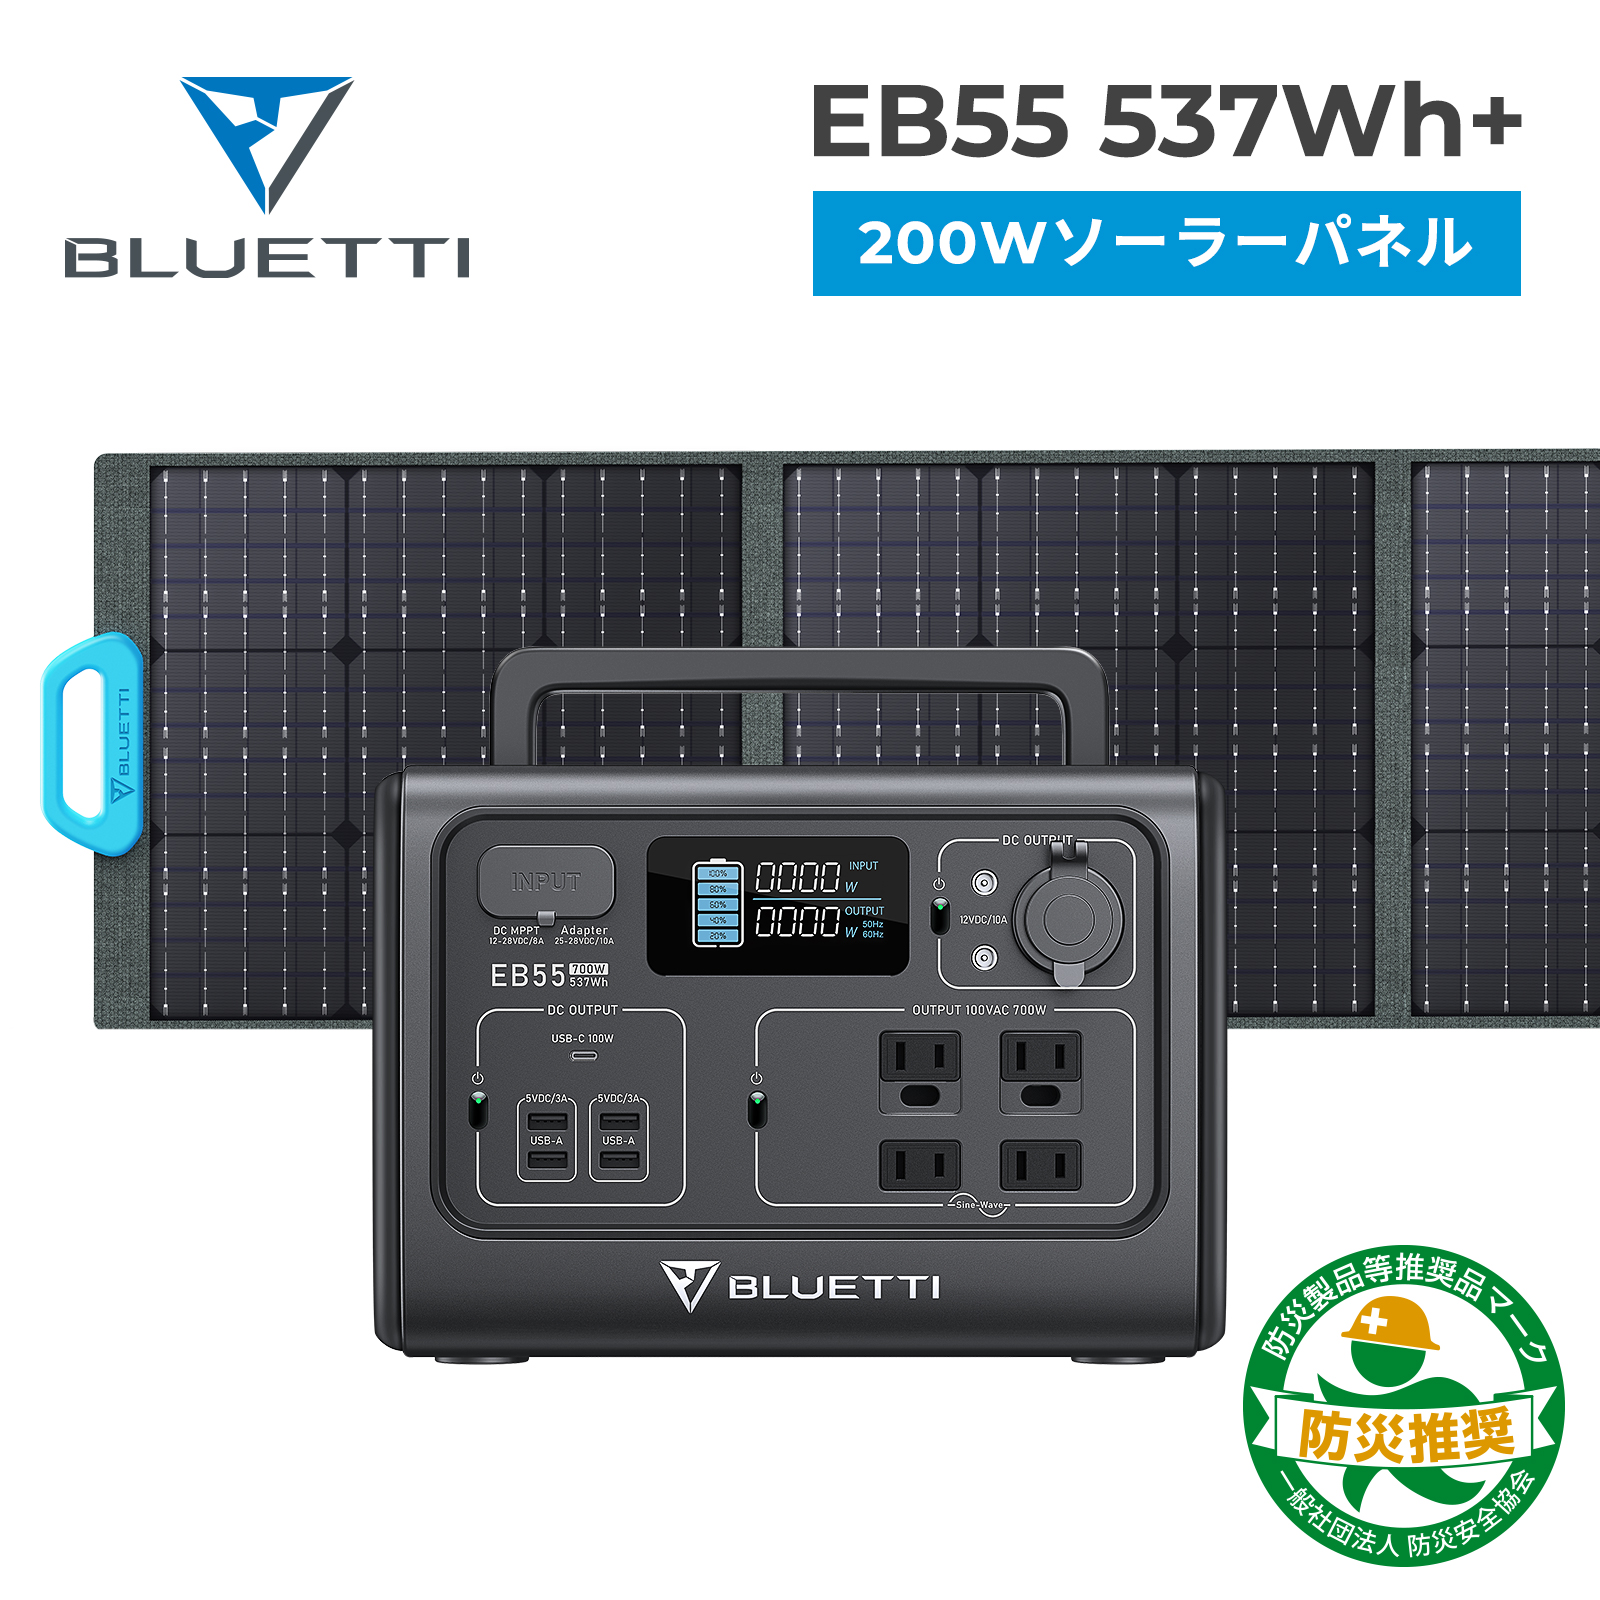 BLUETTI JAPAN ショップBLUETTI 家庭用 ソーラーパネル 停電 発電機 EB55+PV200 リン酸鉄 ポータブル電源 700W  軽量 537Wh セット ポータブルバッテリー 太陽光パネル 防災